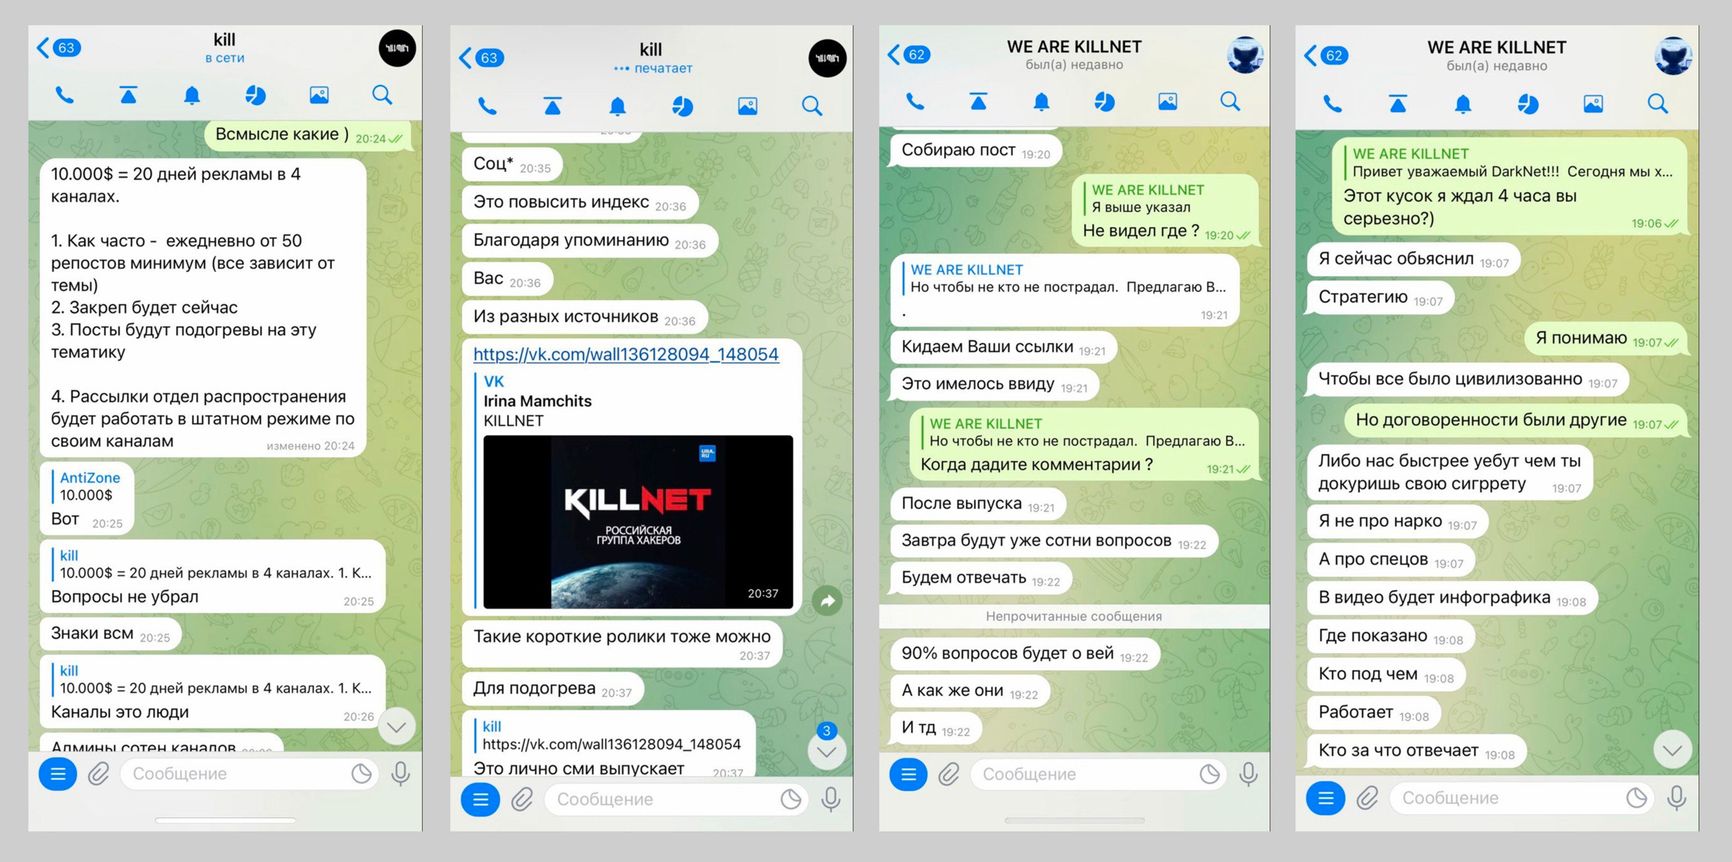 Screenshots of correspondence between KillMilk and a representative of Rutor about ad sales